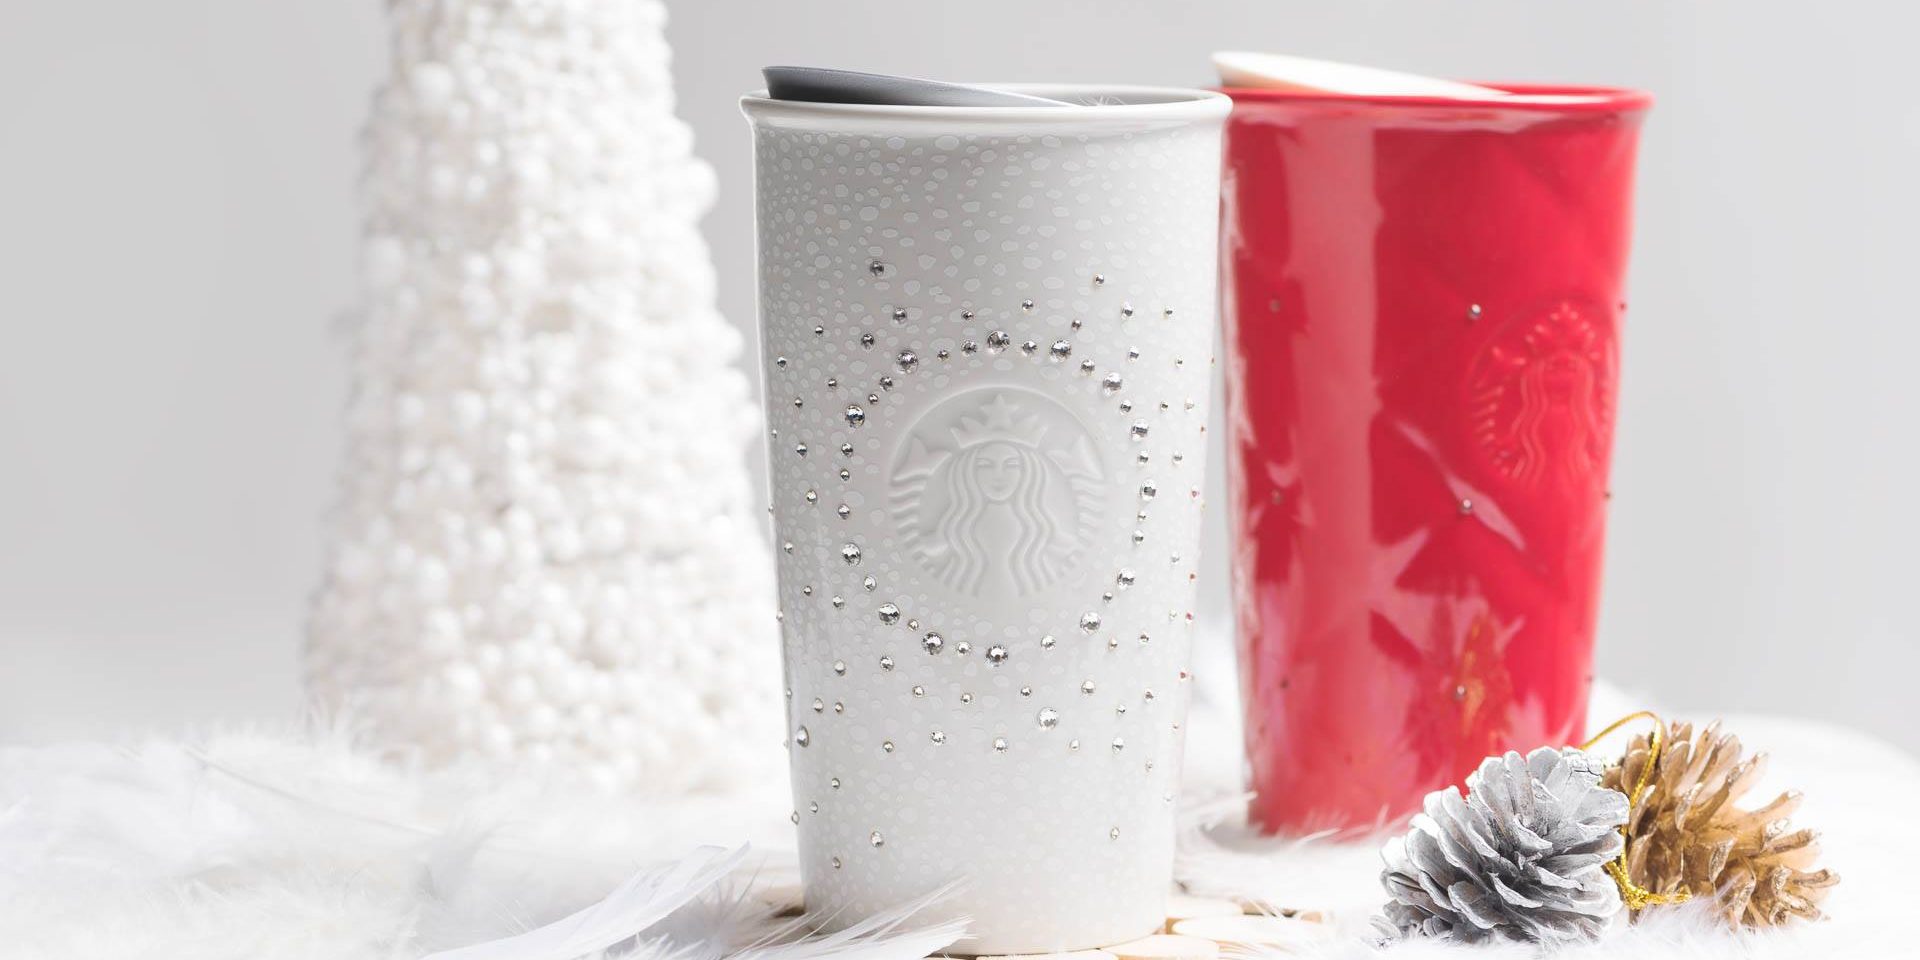 Starbucks Singapore Starbucks Swarovski Mugs at 20% Off with Starbucks Card Promotion 5-11 Dec 2016